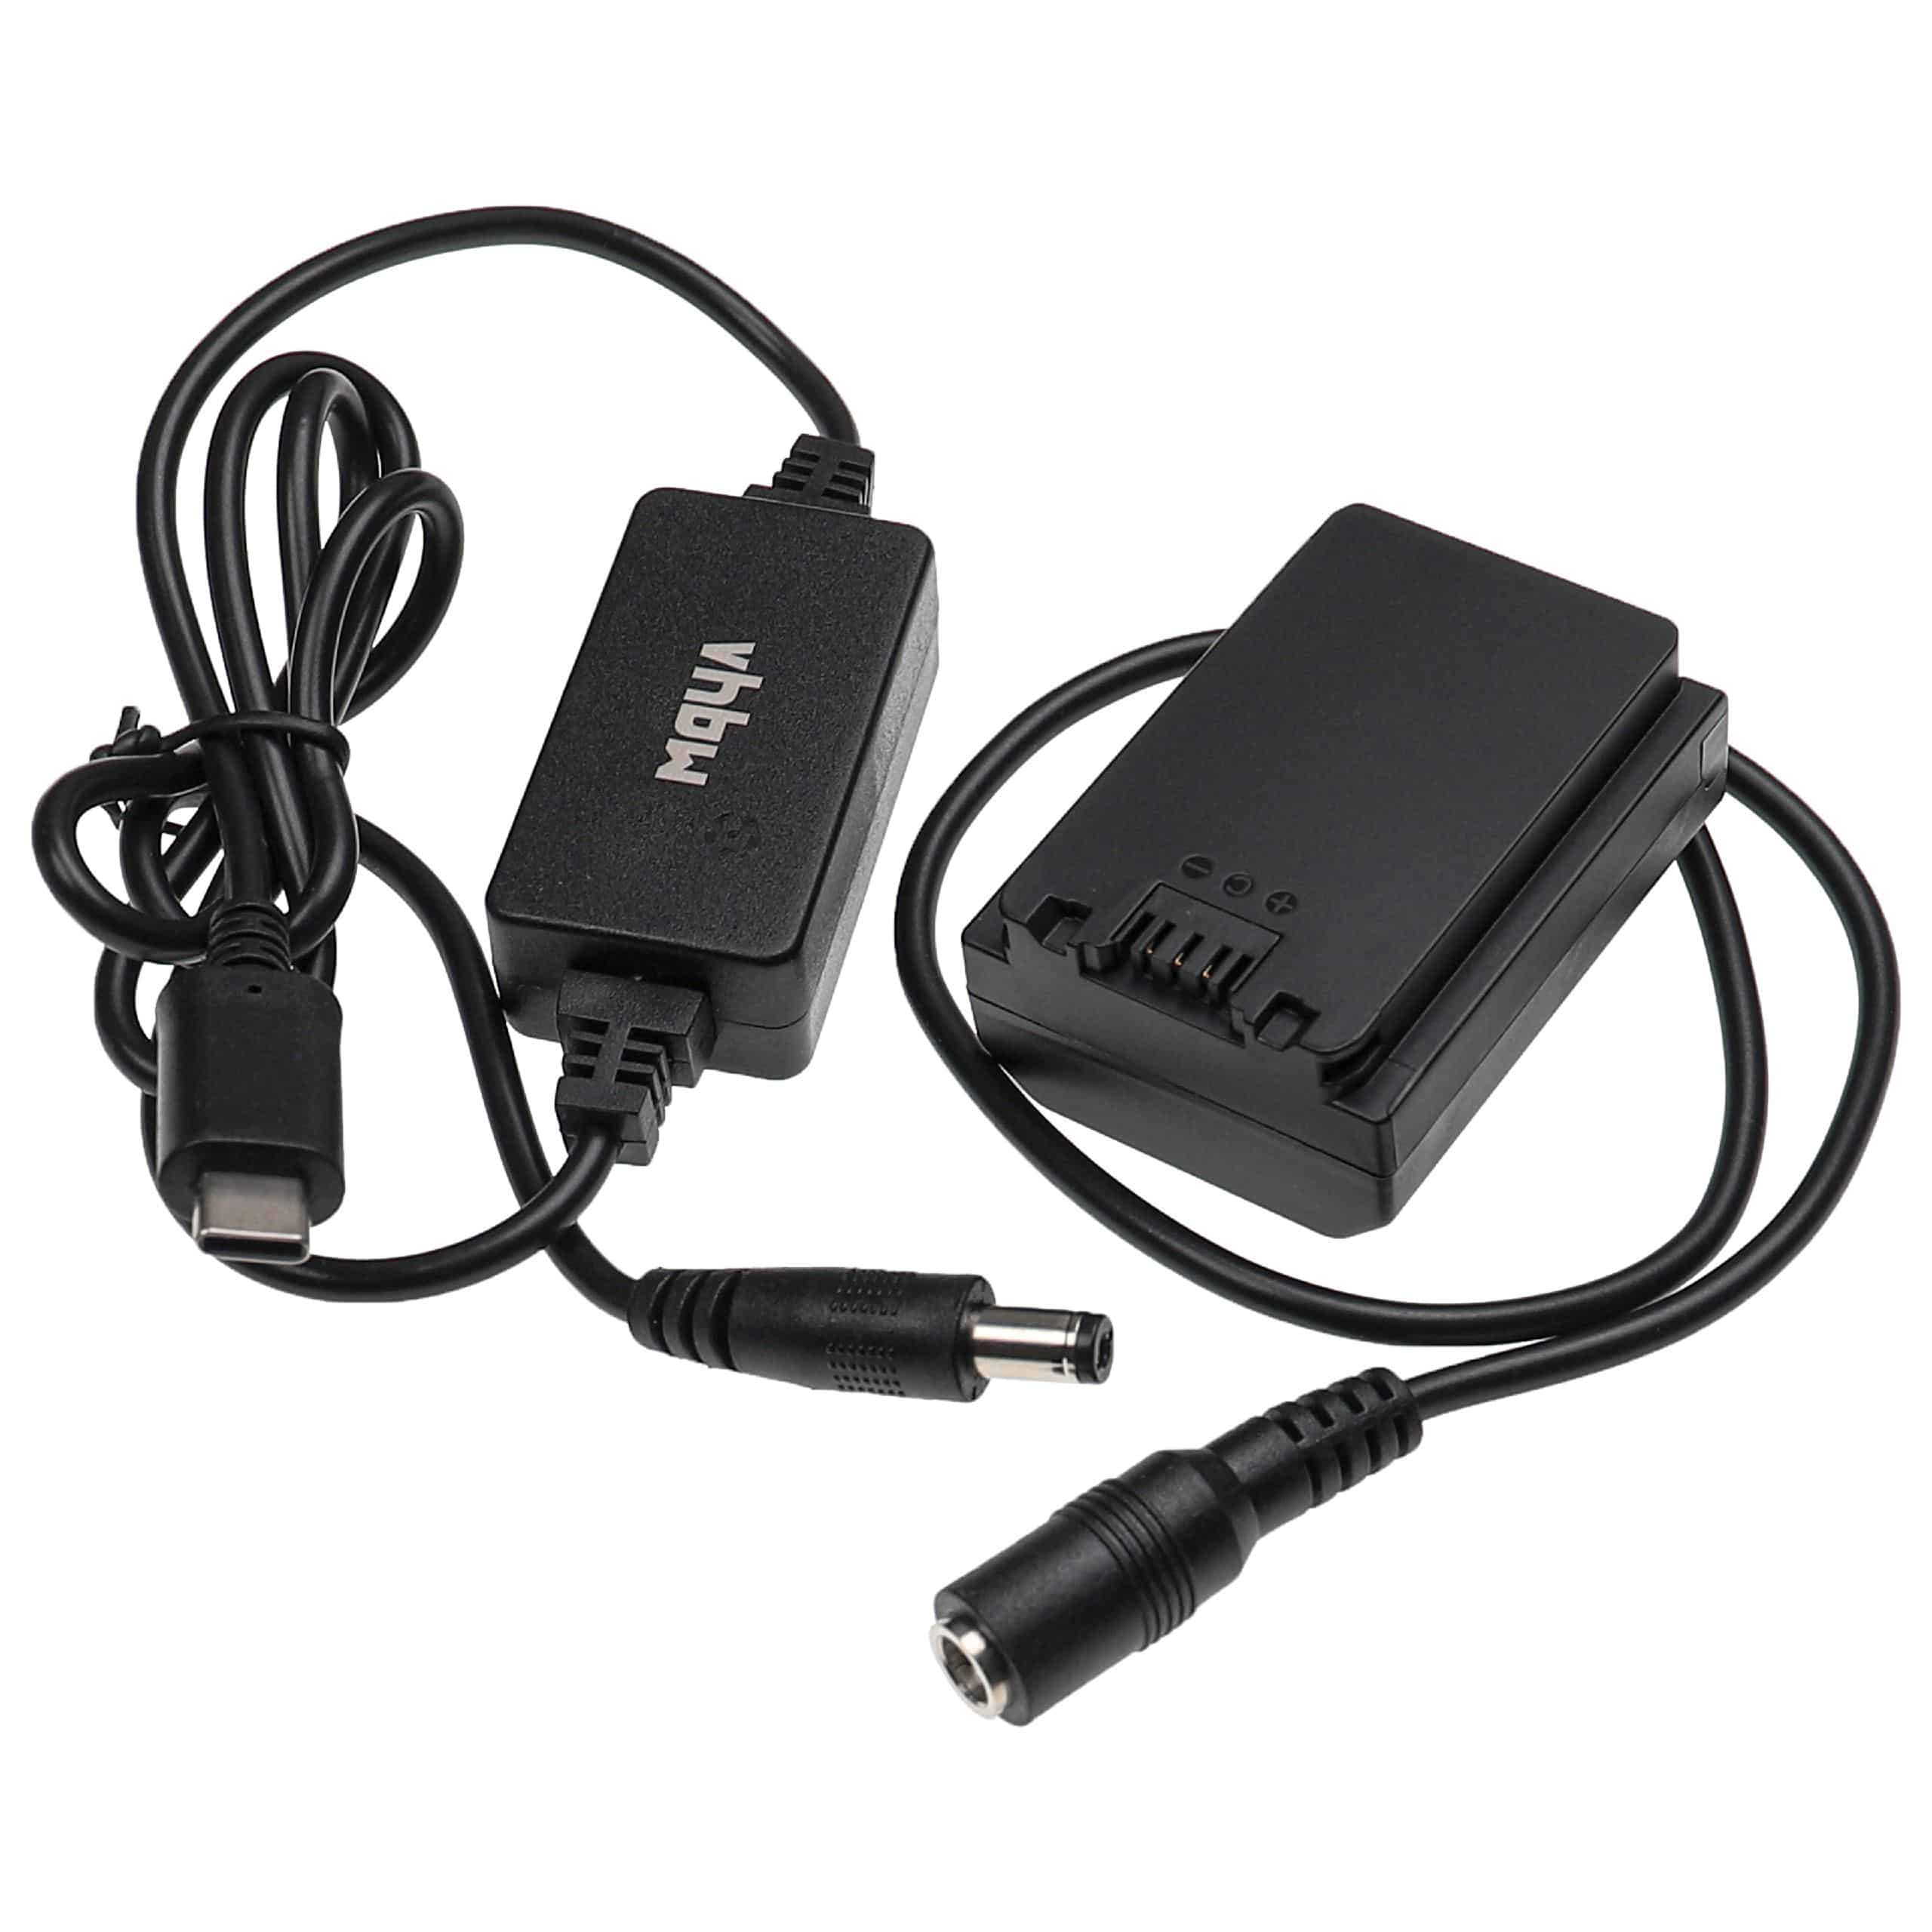 Fuente alimentación USB reemplaza Sony AC-FZ100 para cámaras + acoplador CC reemplaza Sony NP-FZ100